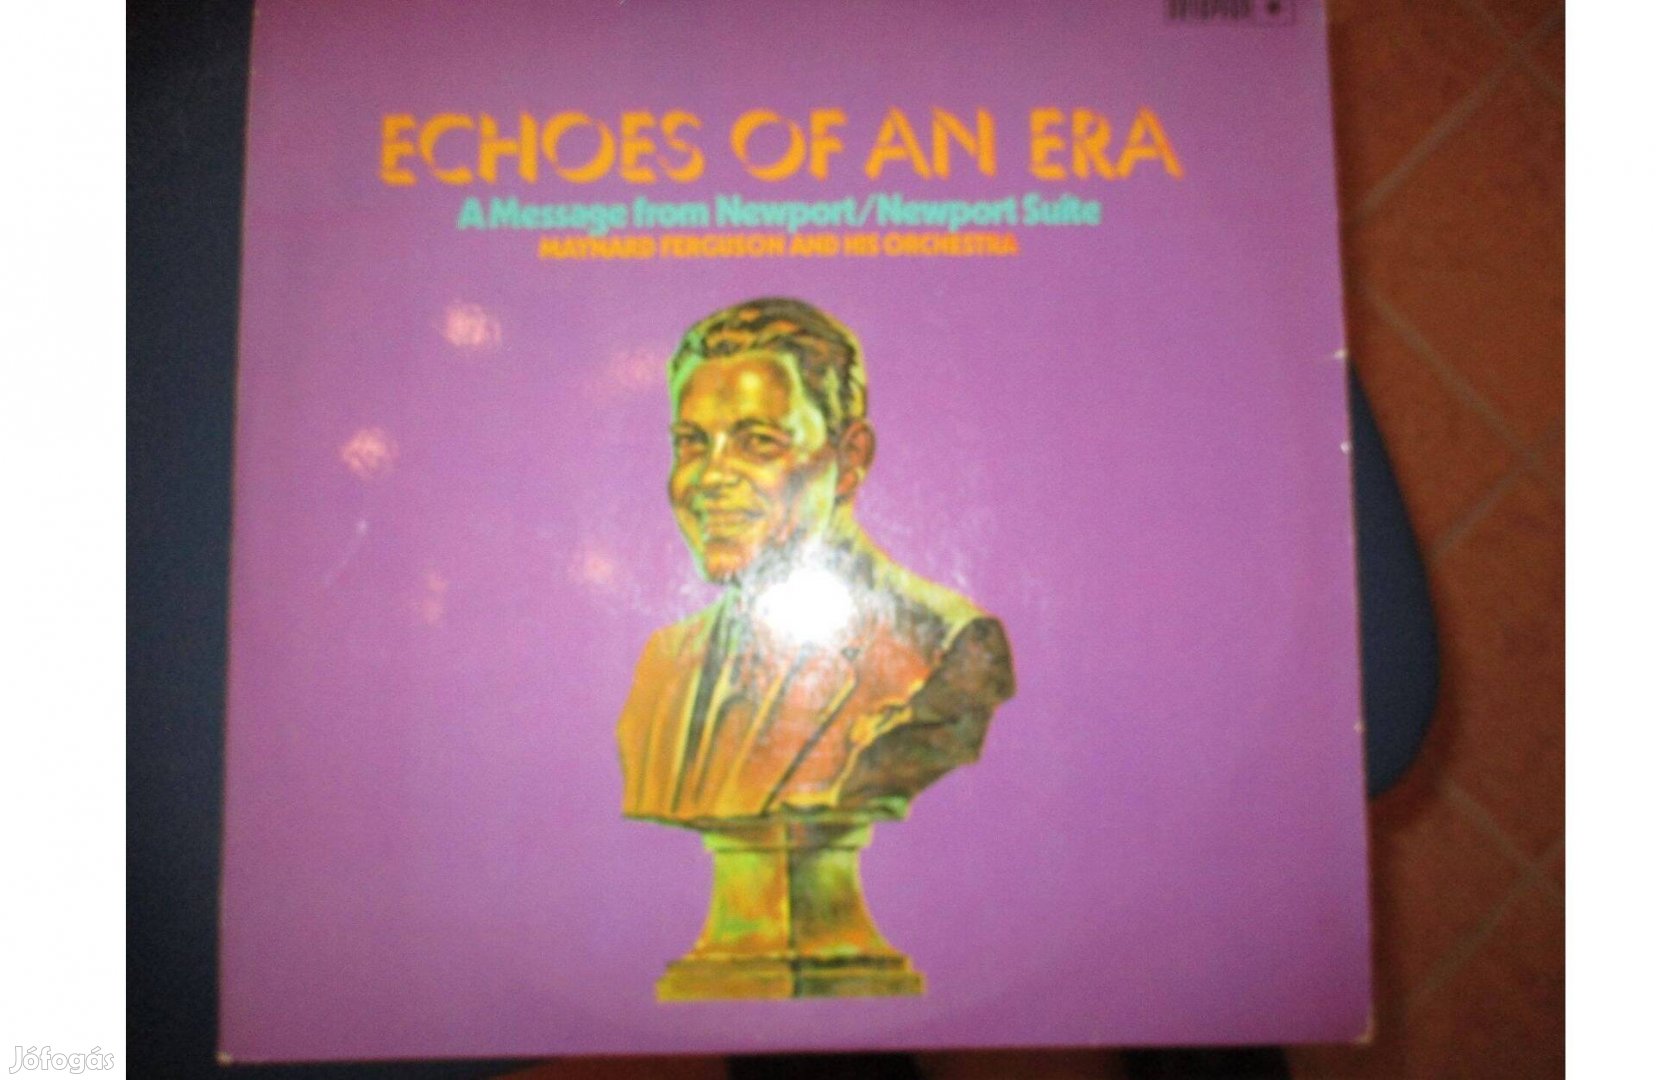 Echoes of an era dupla bakelit hanglemez album eladó